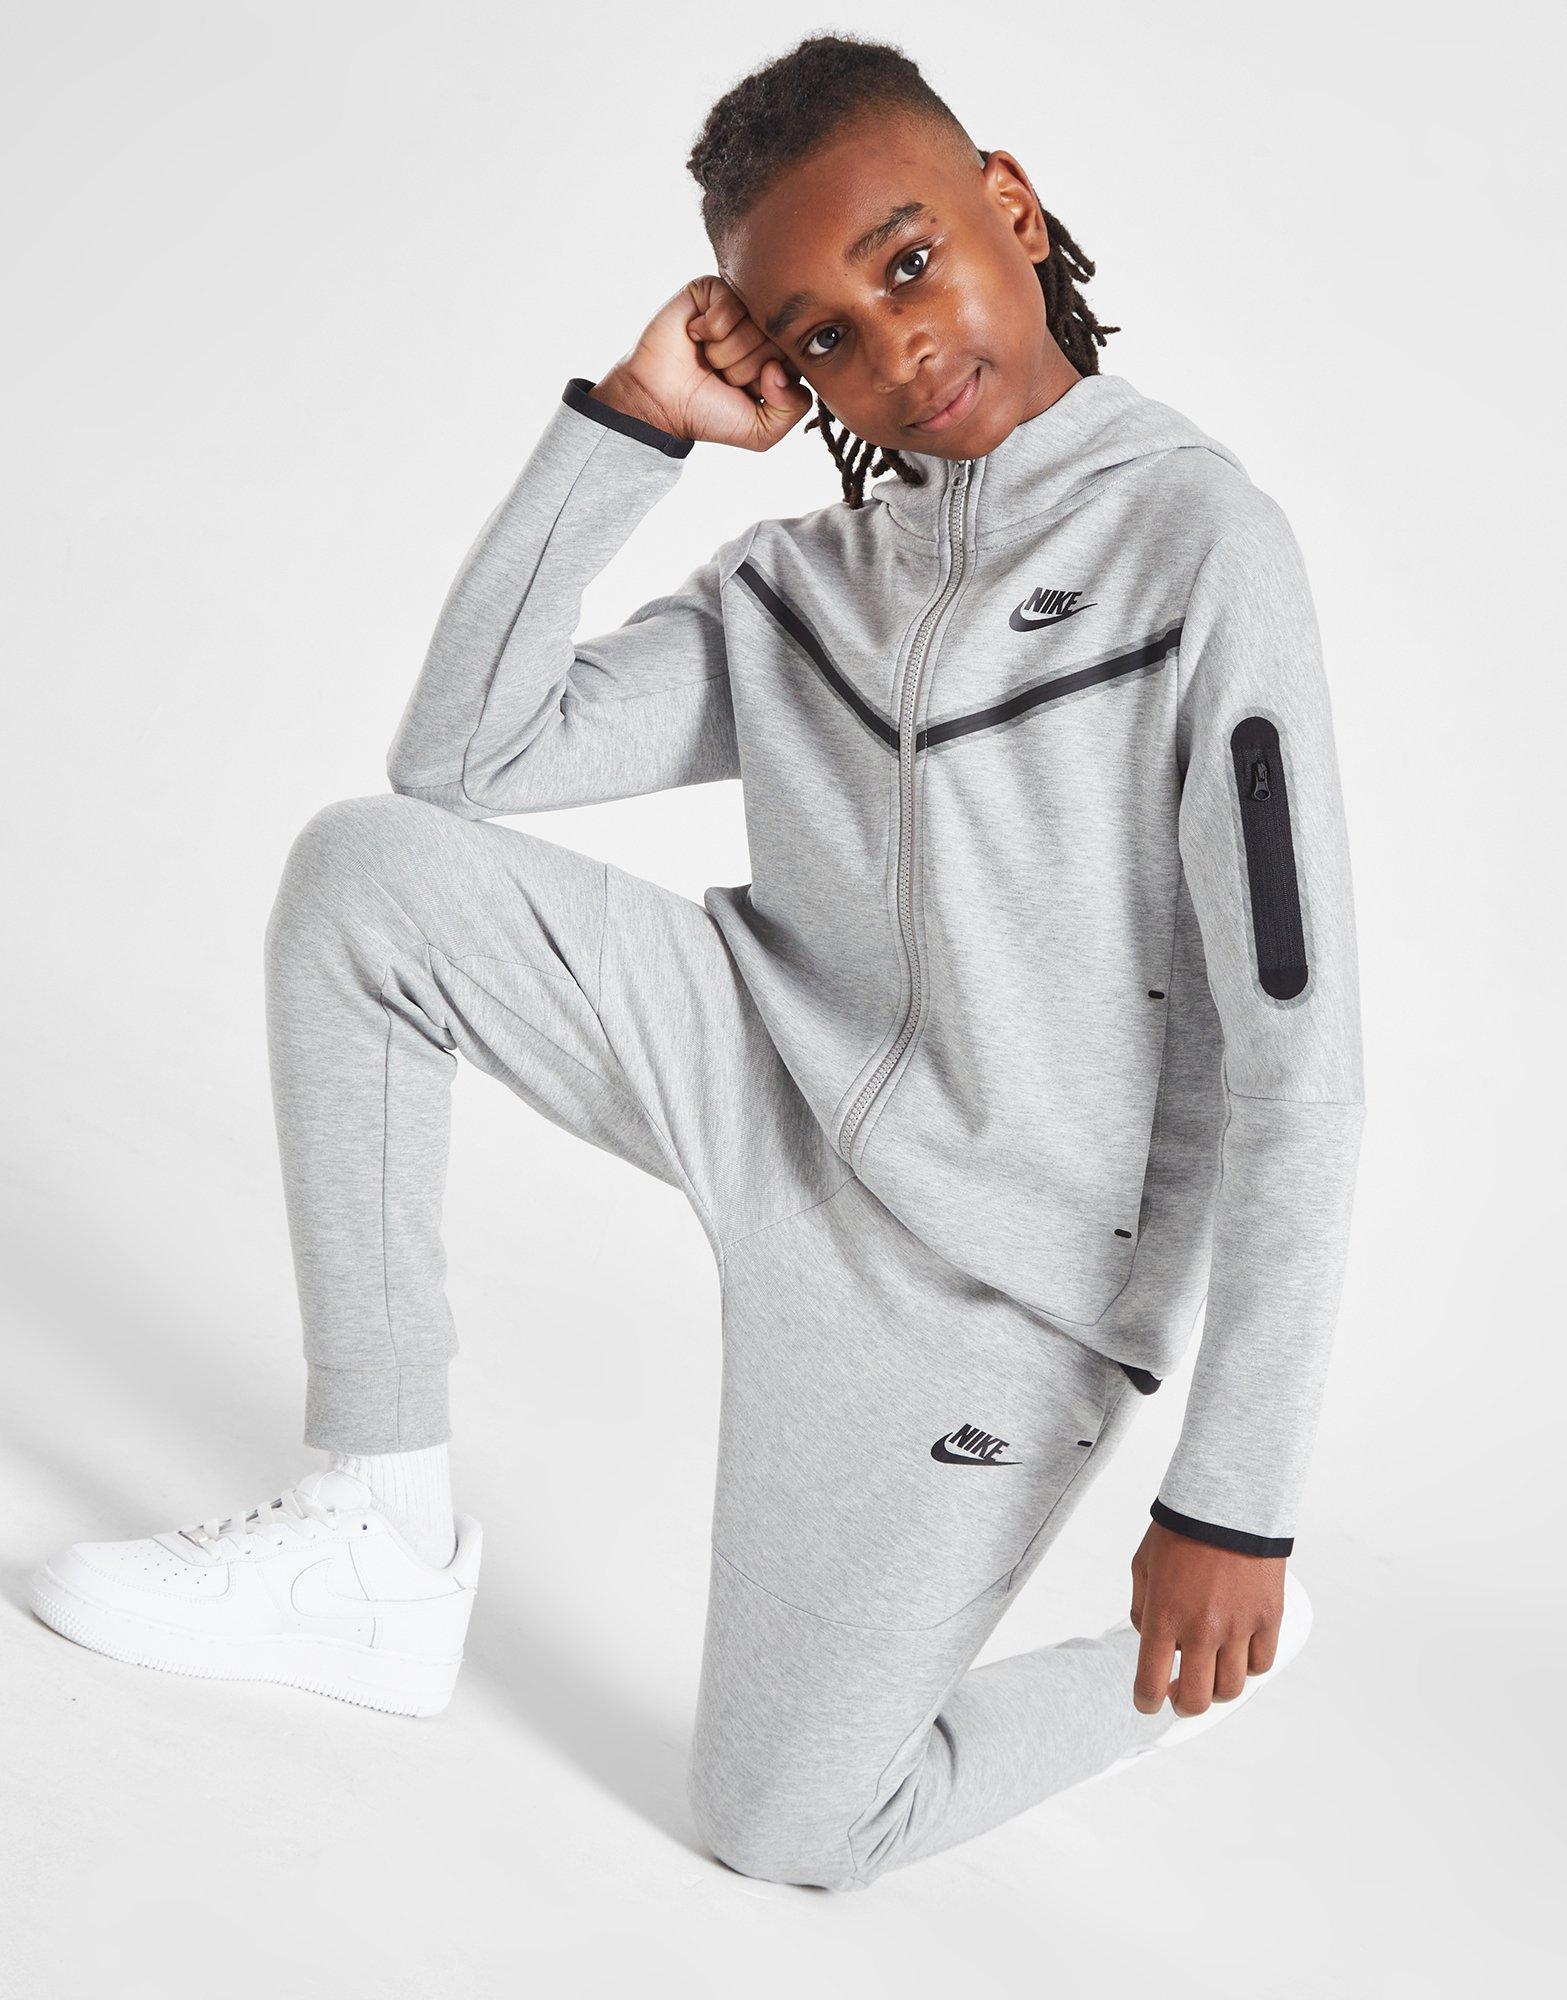 Nike Pantalon de survêtementTech Fleece Junior Noir- JD Sports France